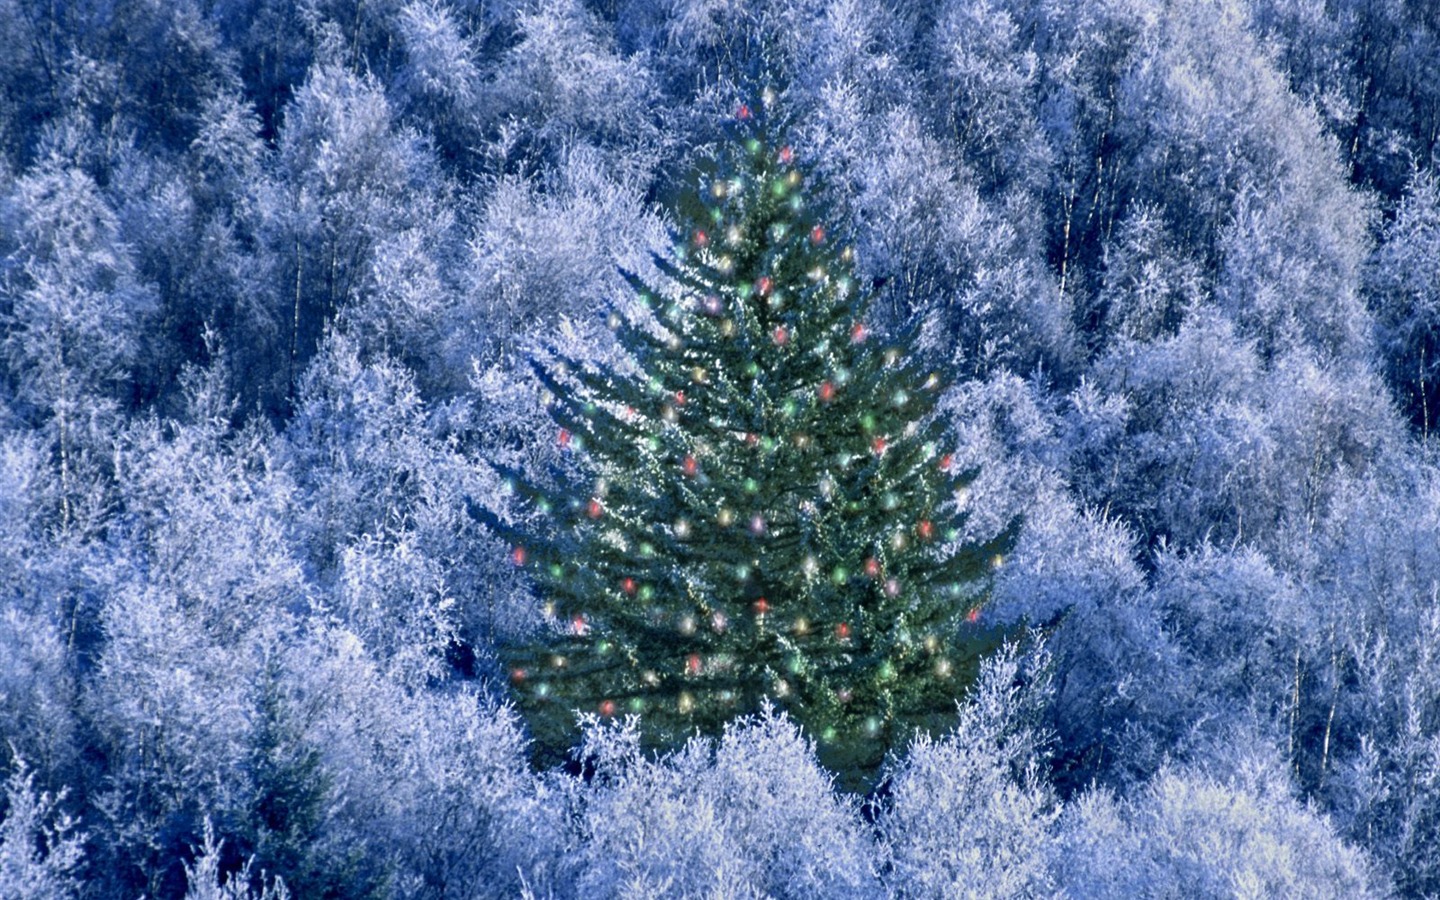 Fond d'écran de Noël série aménagement paysager (4) #15 - 1440x900